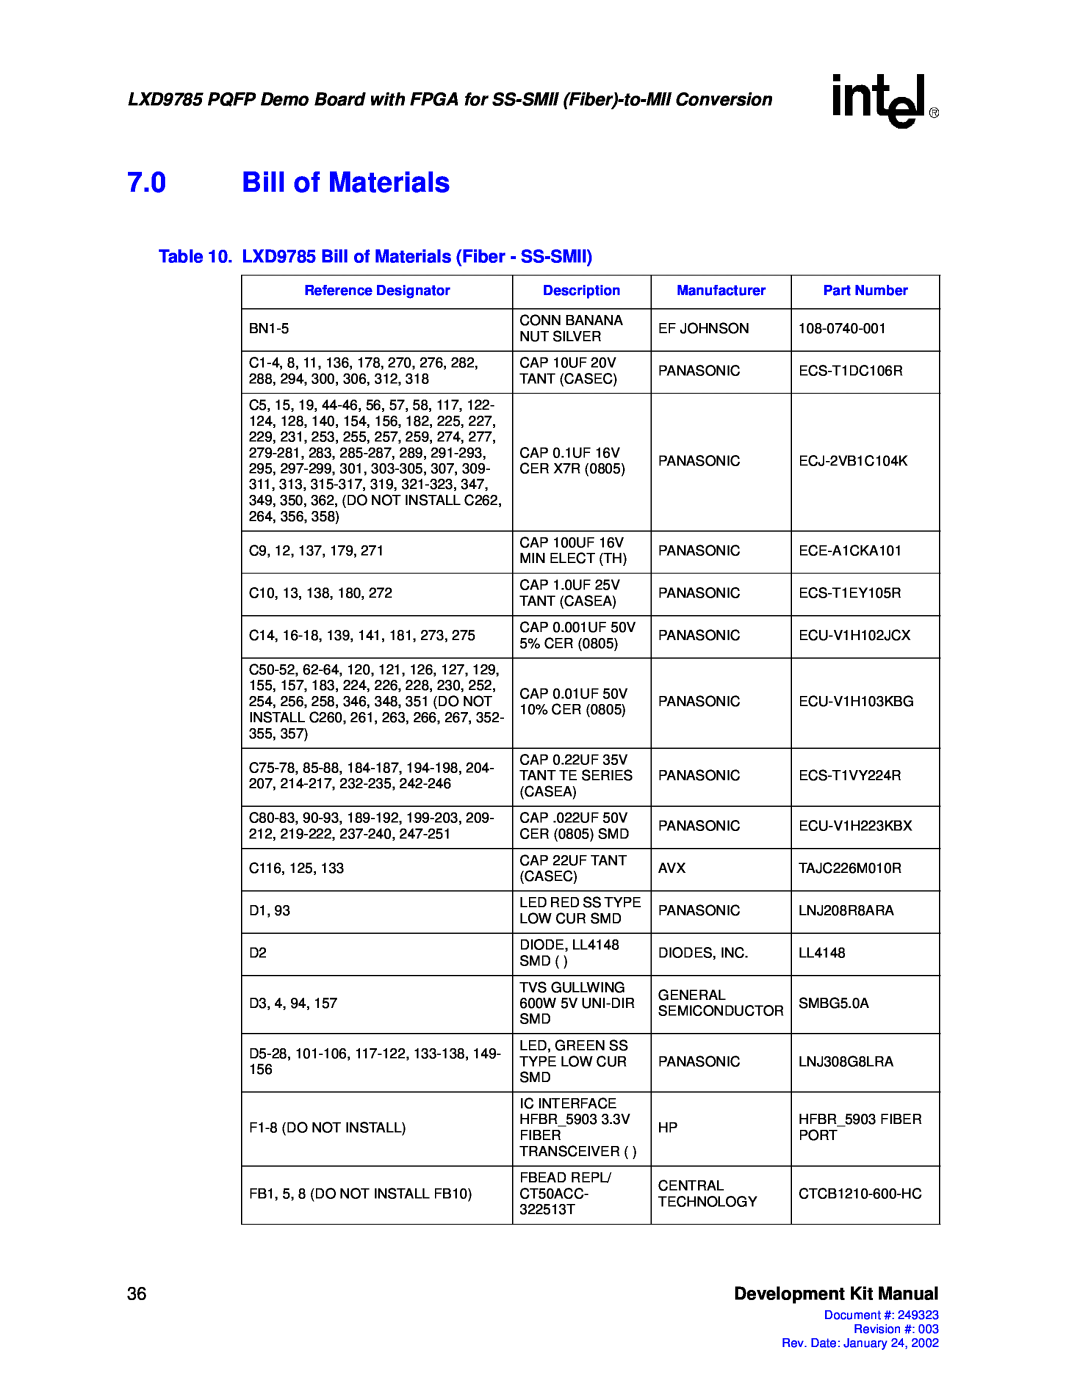 Intel 249323-003 LXD9785 Bill of Materials Fiber - SS-SMII, Development Kit Manual, Reference Designator, Description 